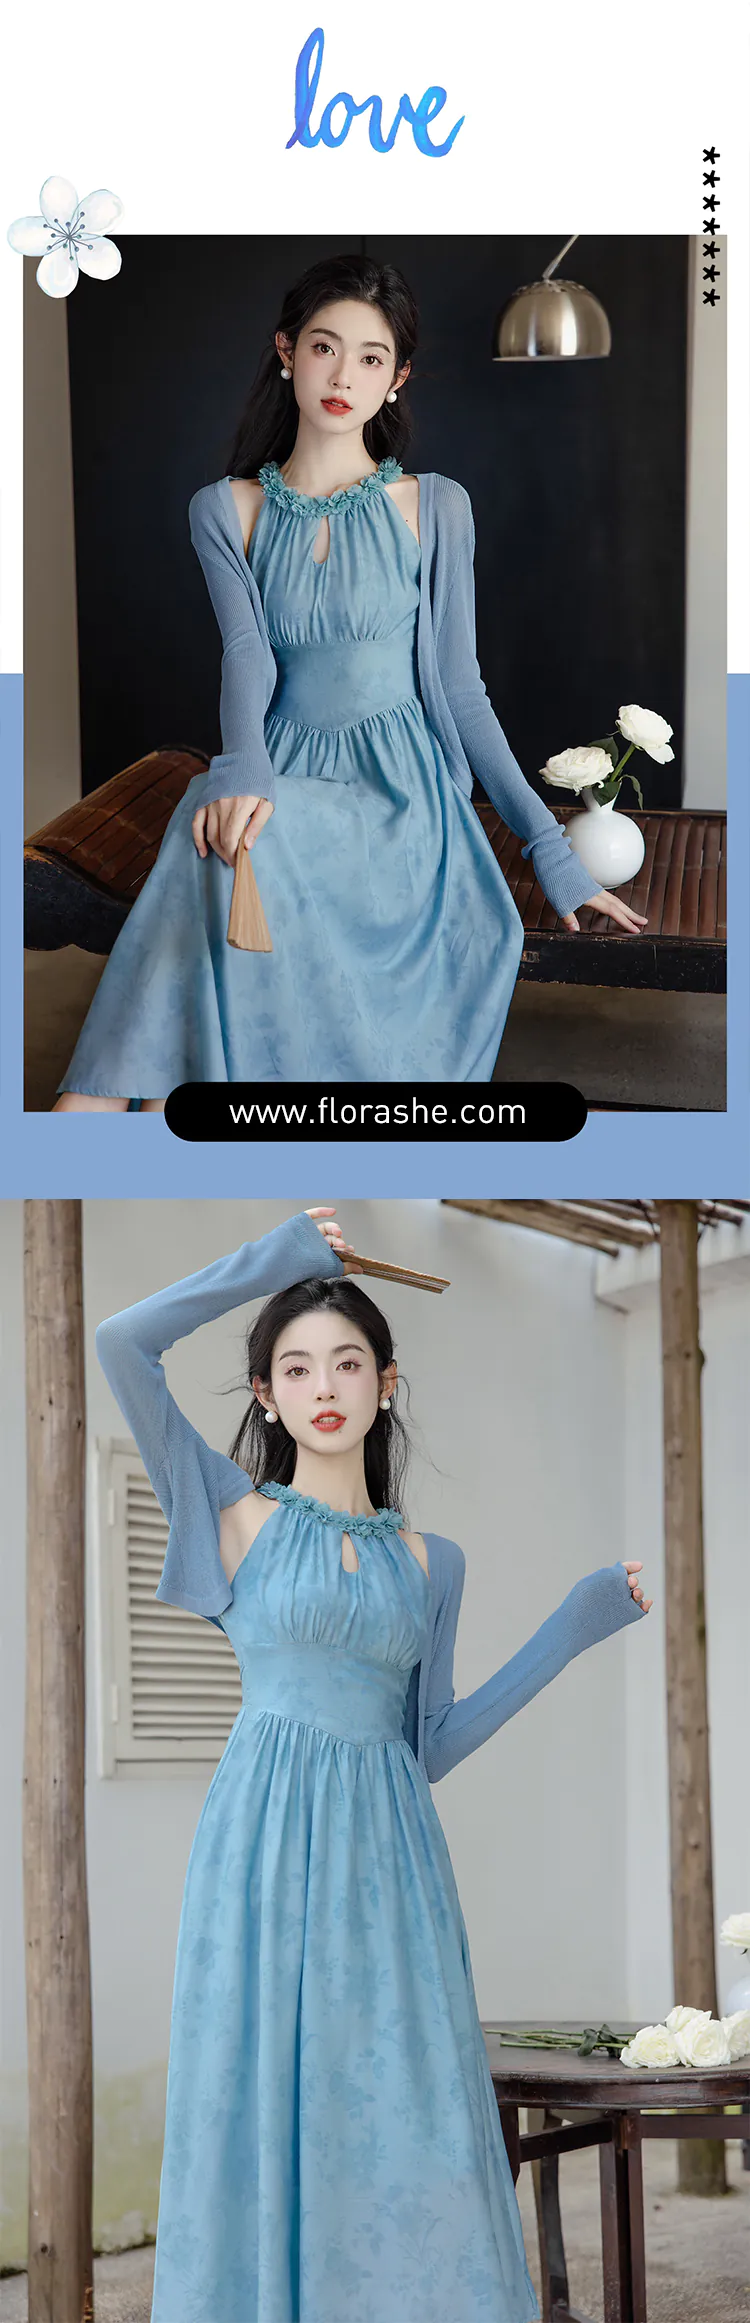 Sweet-Soft-Blue-Flower-Printed-Chiffon-Casual-Dress-with-Cardigan-Set09